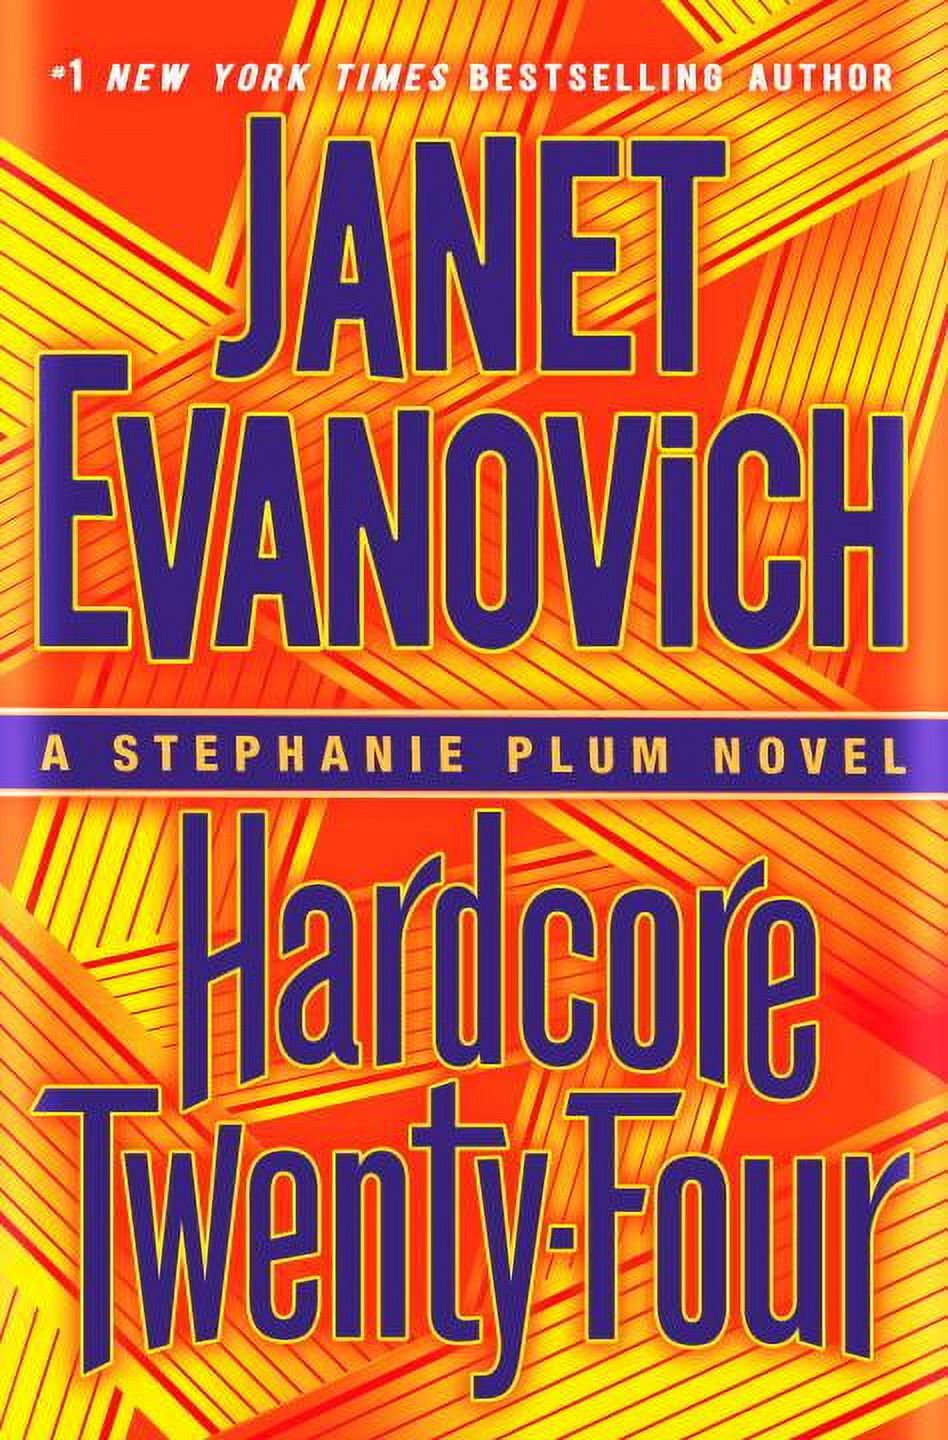 Hardcore Twenty-Four: A Stephanie Plum Novel (Hardcover) by Janet Evanovich - image 1 of 2